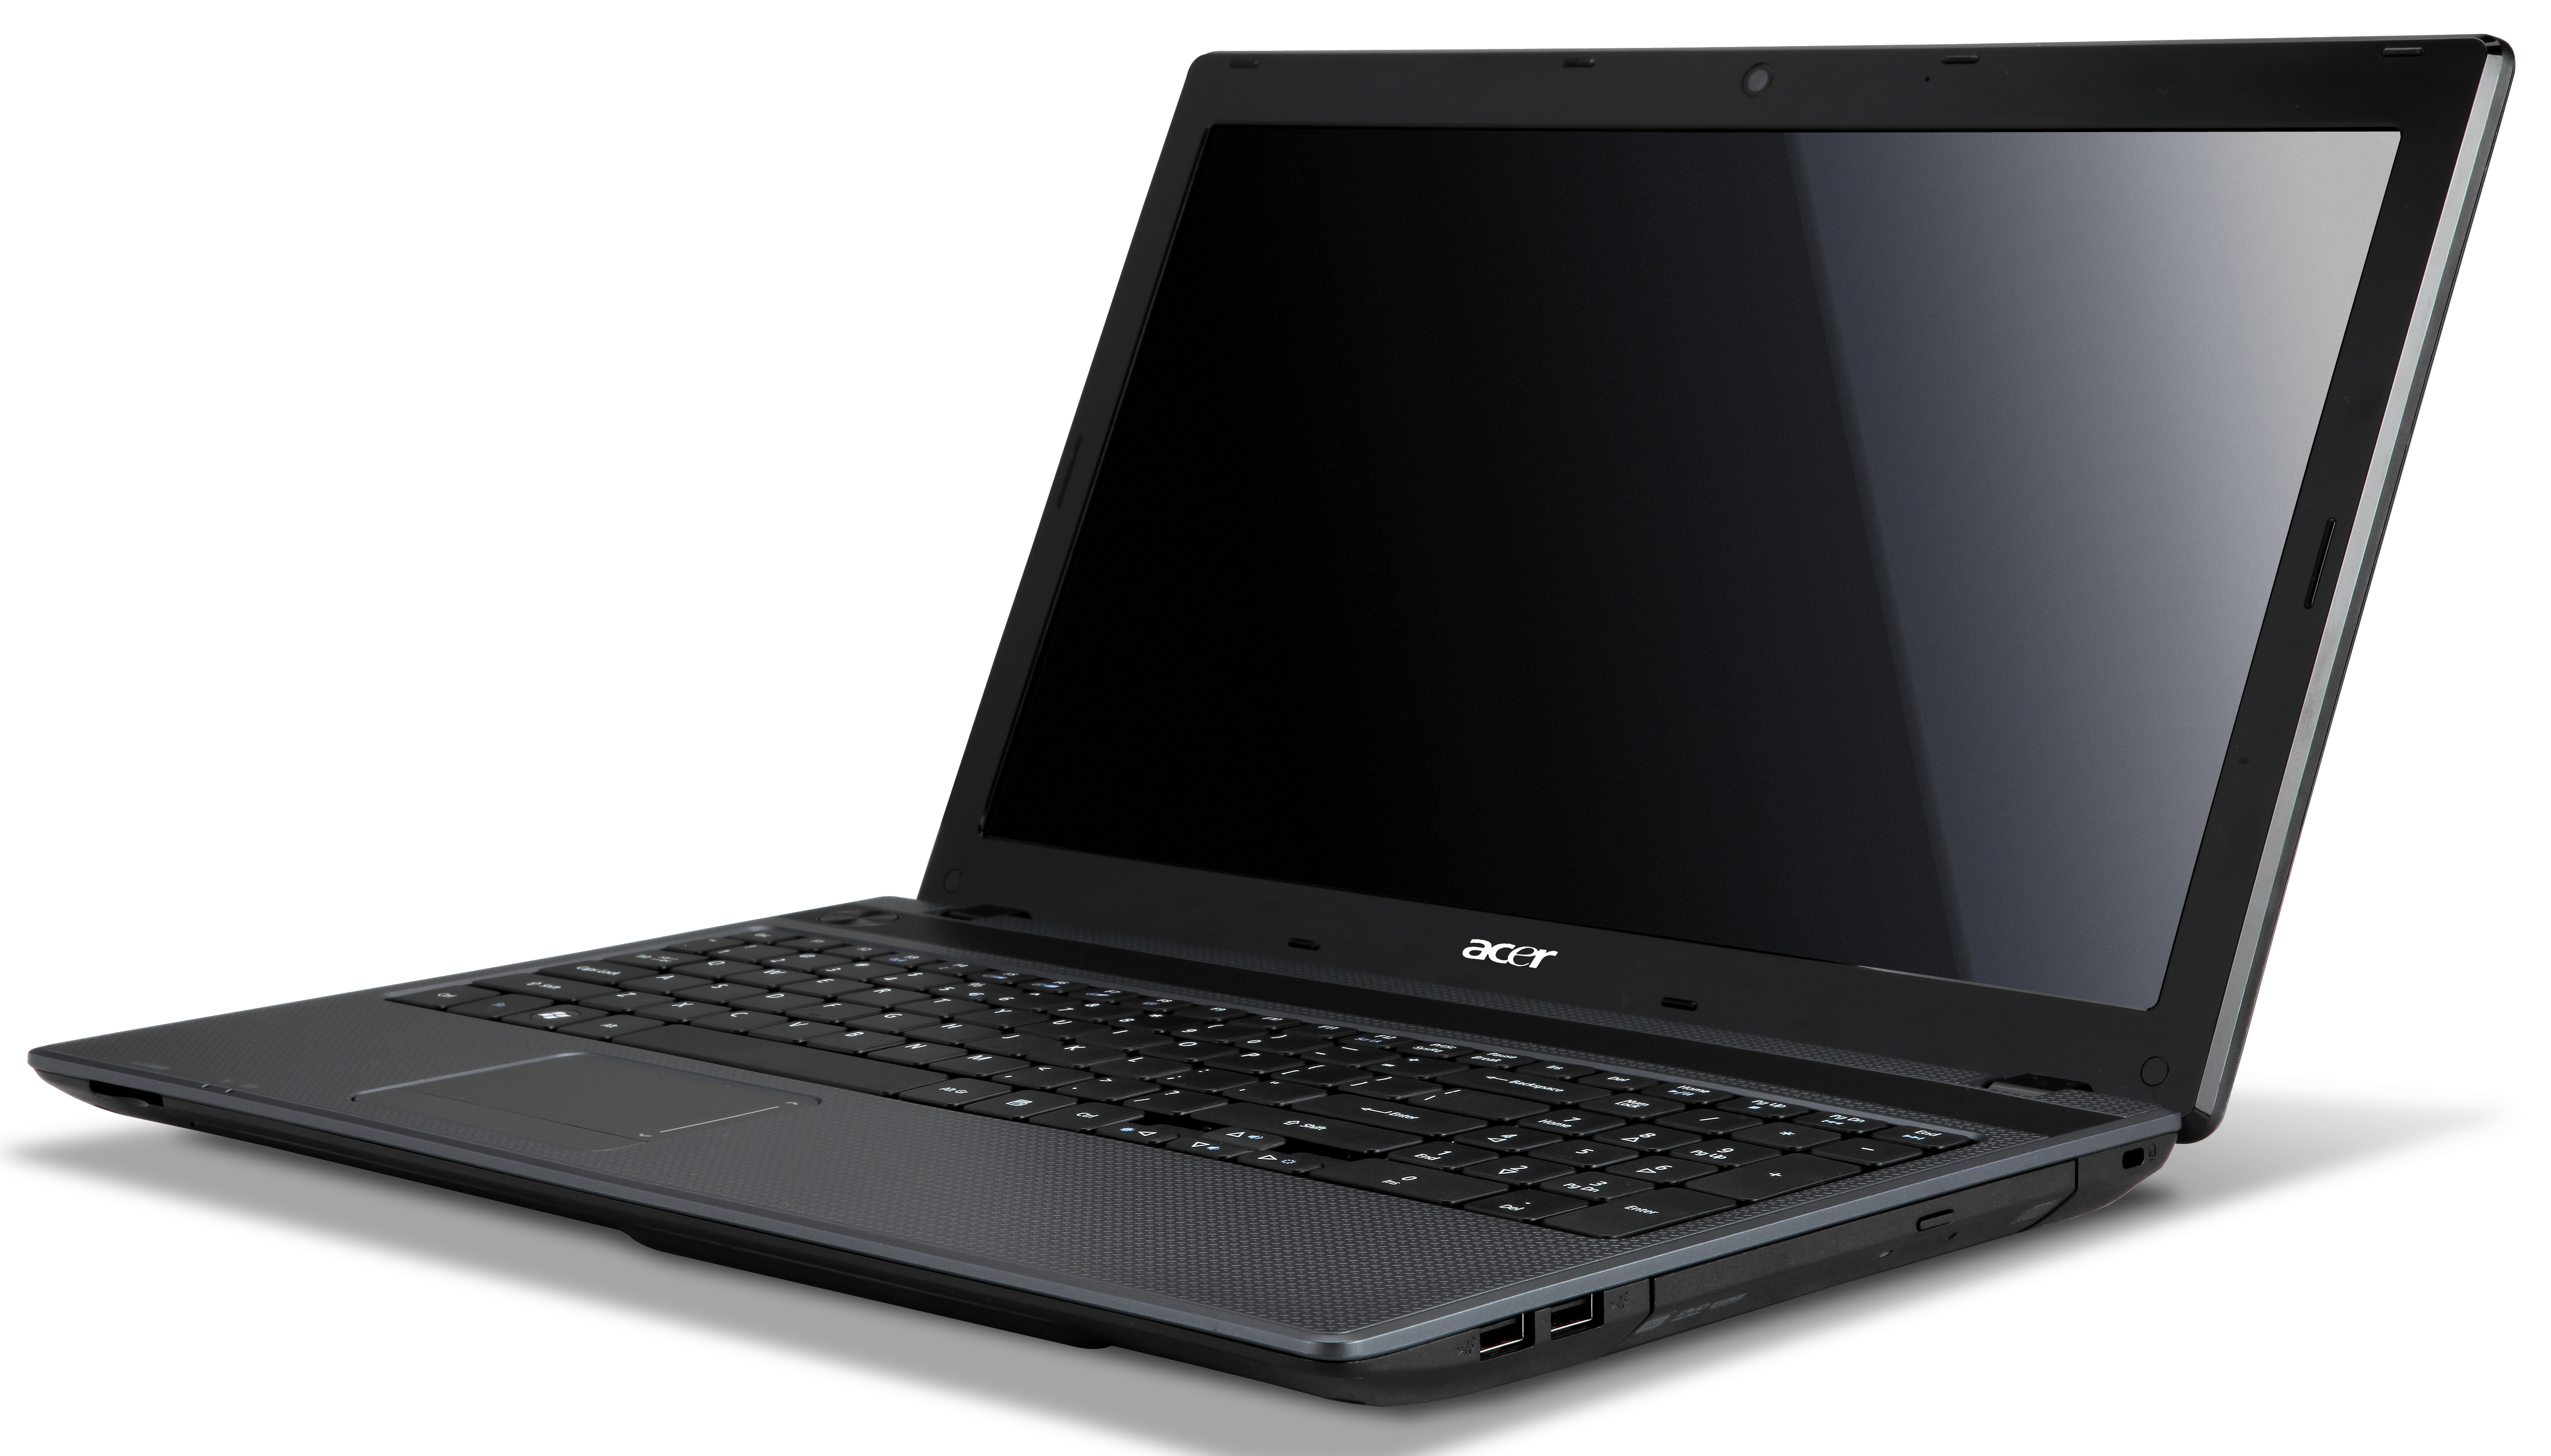 M5i5r xgzafemo5vfjwlyw. Ноутбук Acer TRAVELMATE 5744-382g32mnkk. Acer Aspire 5733z. Ноутбук Acer Aspire 5349-b812g50mnkk. Acer 5733z p622g32.